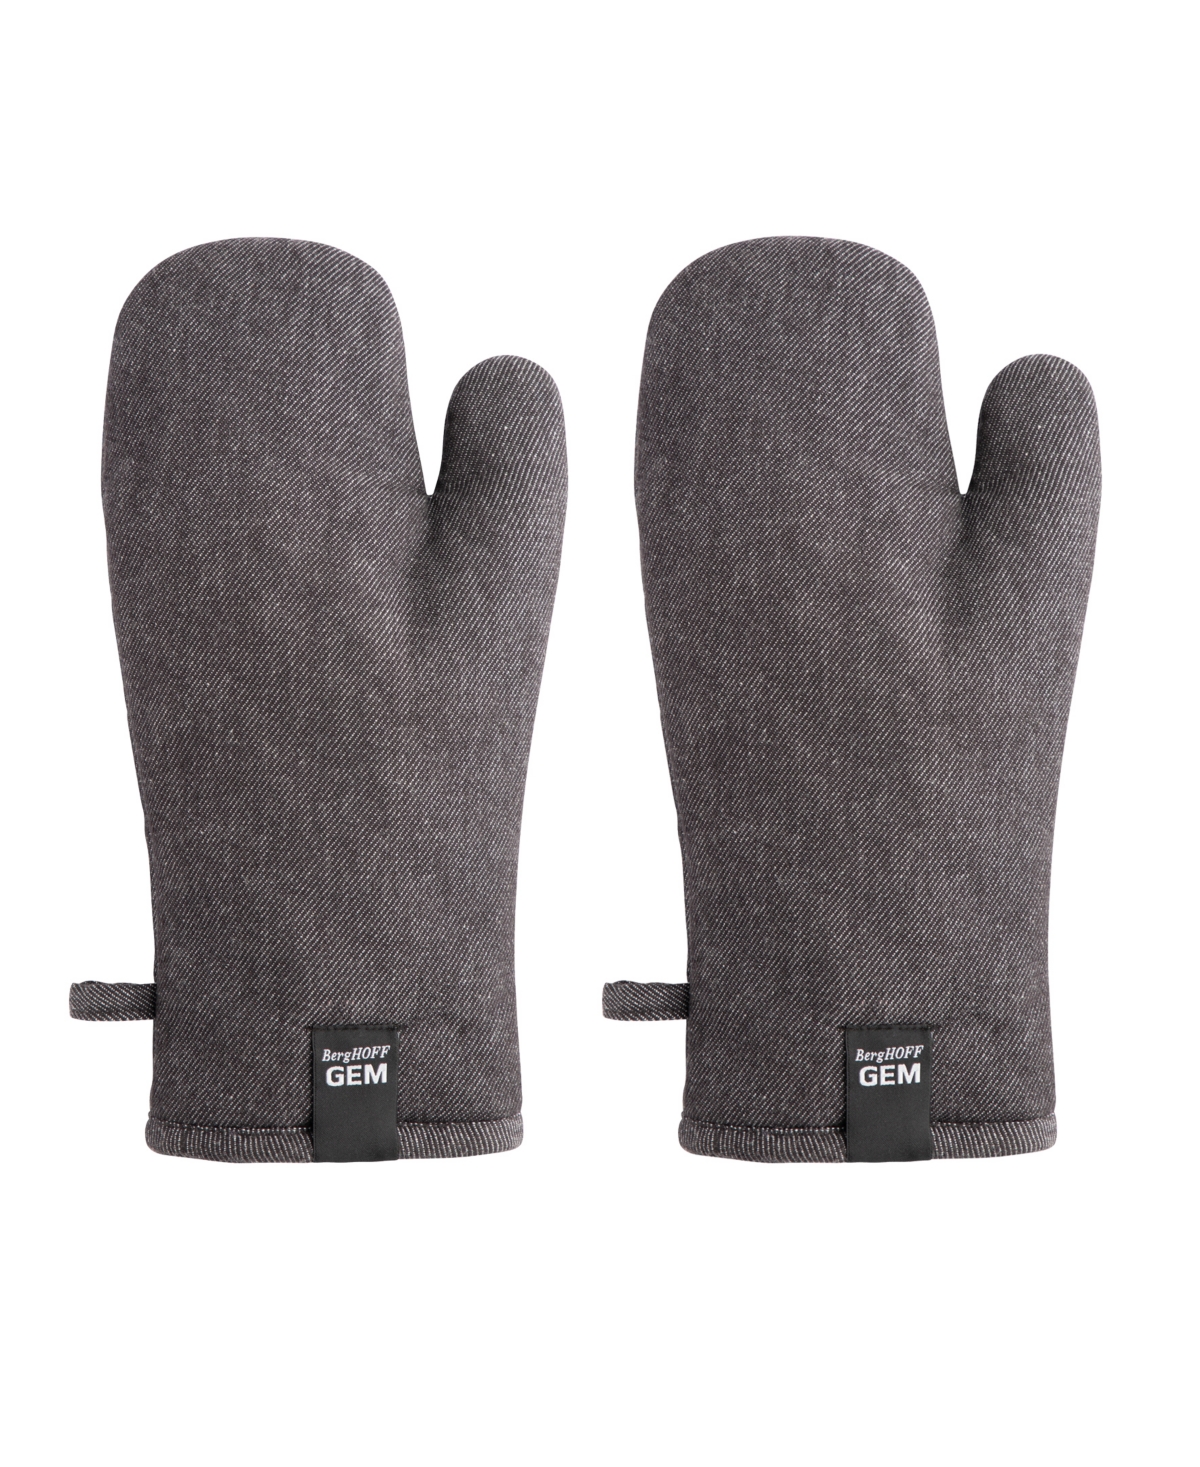 Gem Oven Glove, Set of 2 - Gray